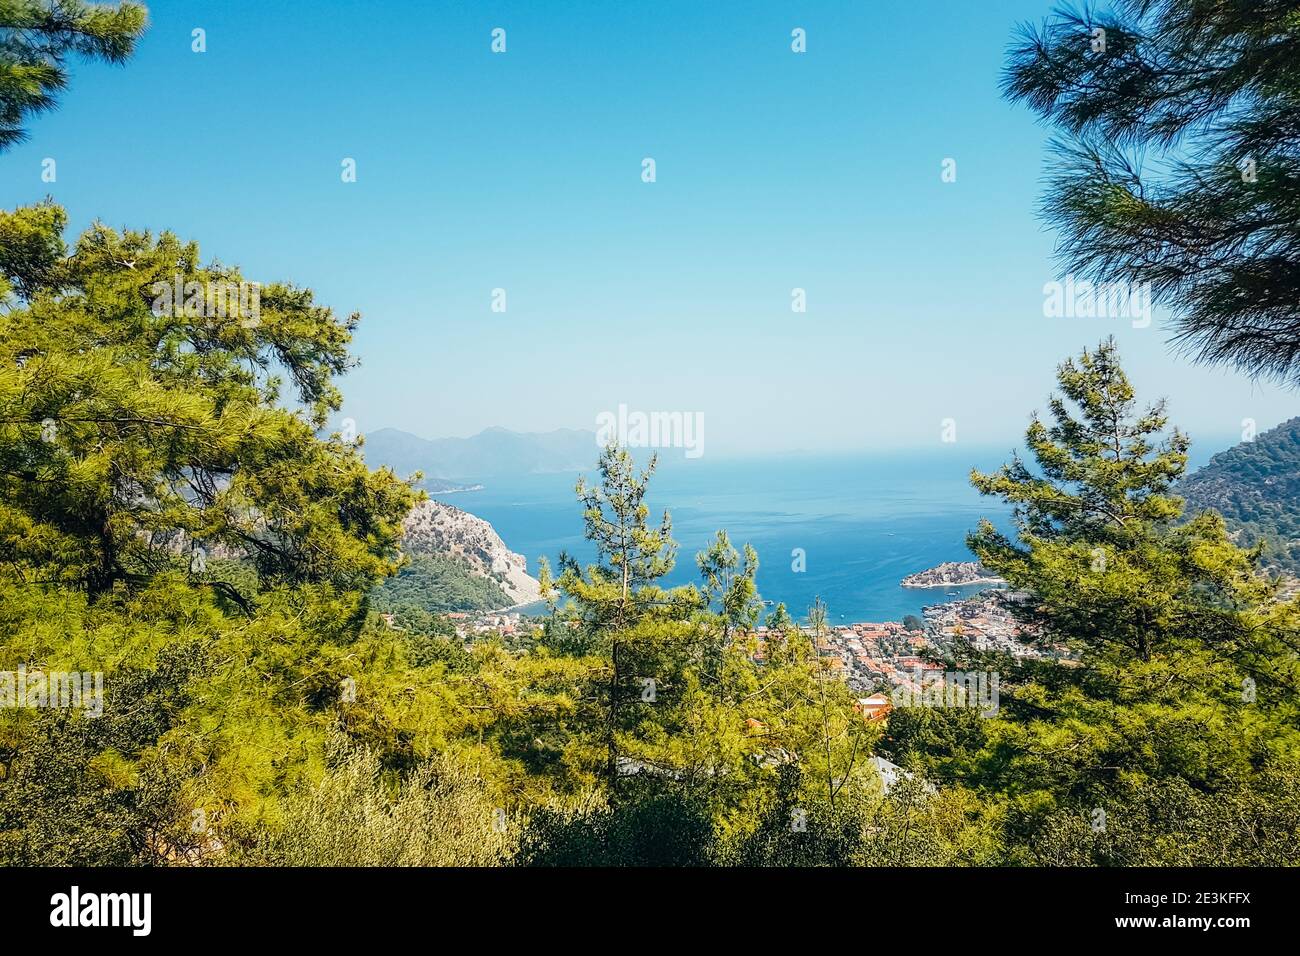 Scenic view from the forest mountain on the coastal village. Turunc, Marmaris, Turkey. Stock Photo